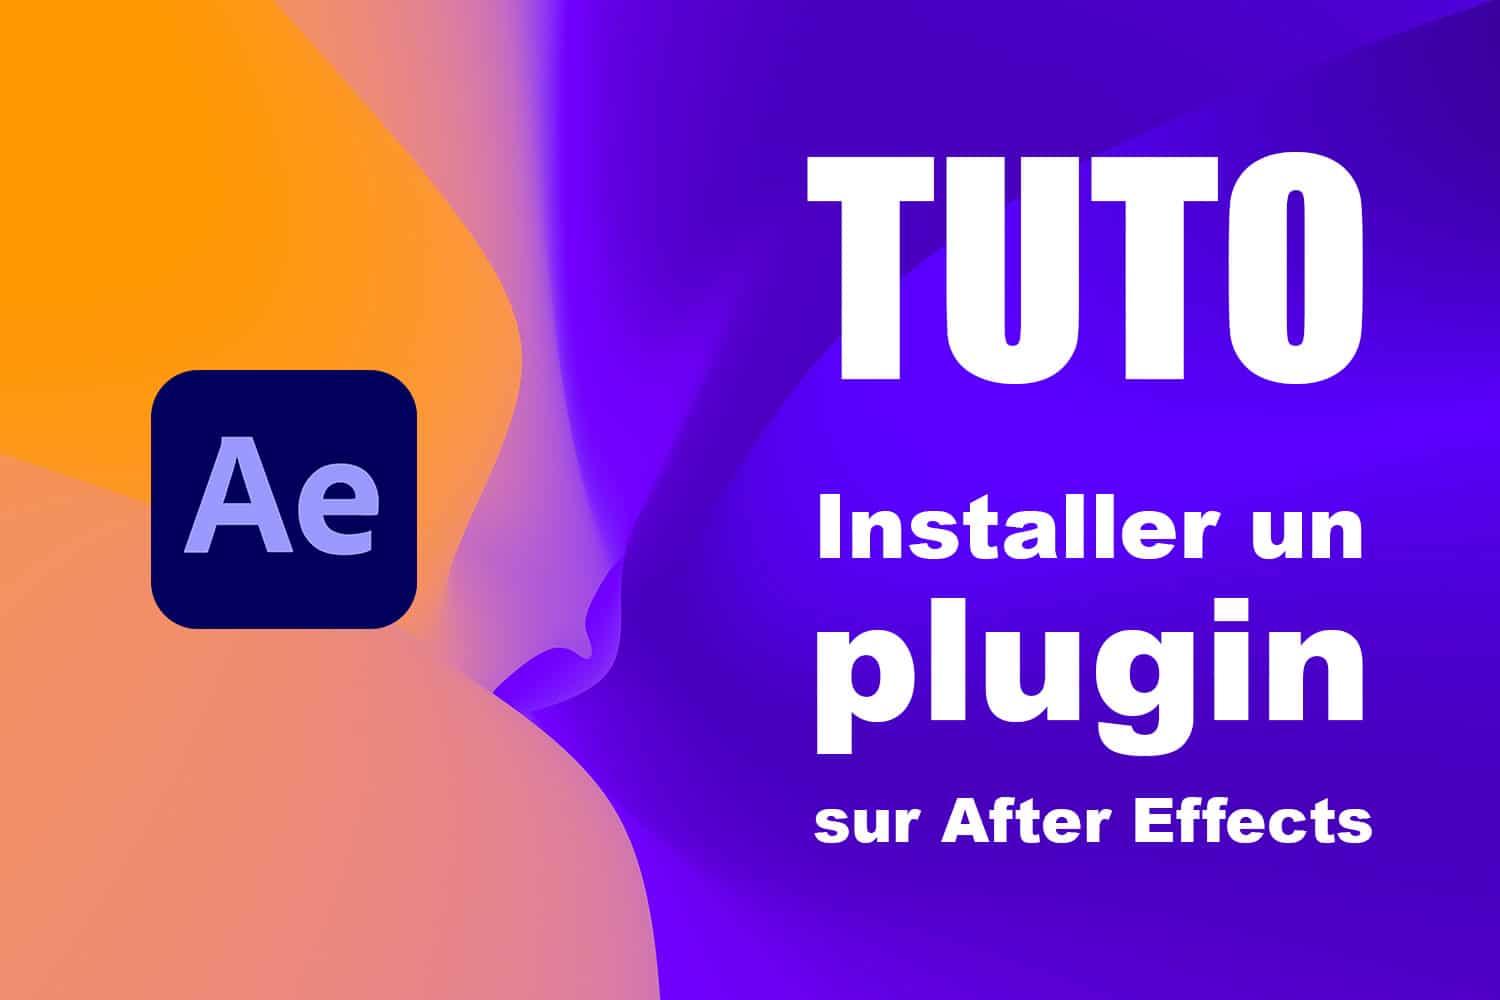 Installer un plugin sur After Effects - tutoriel français